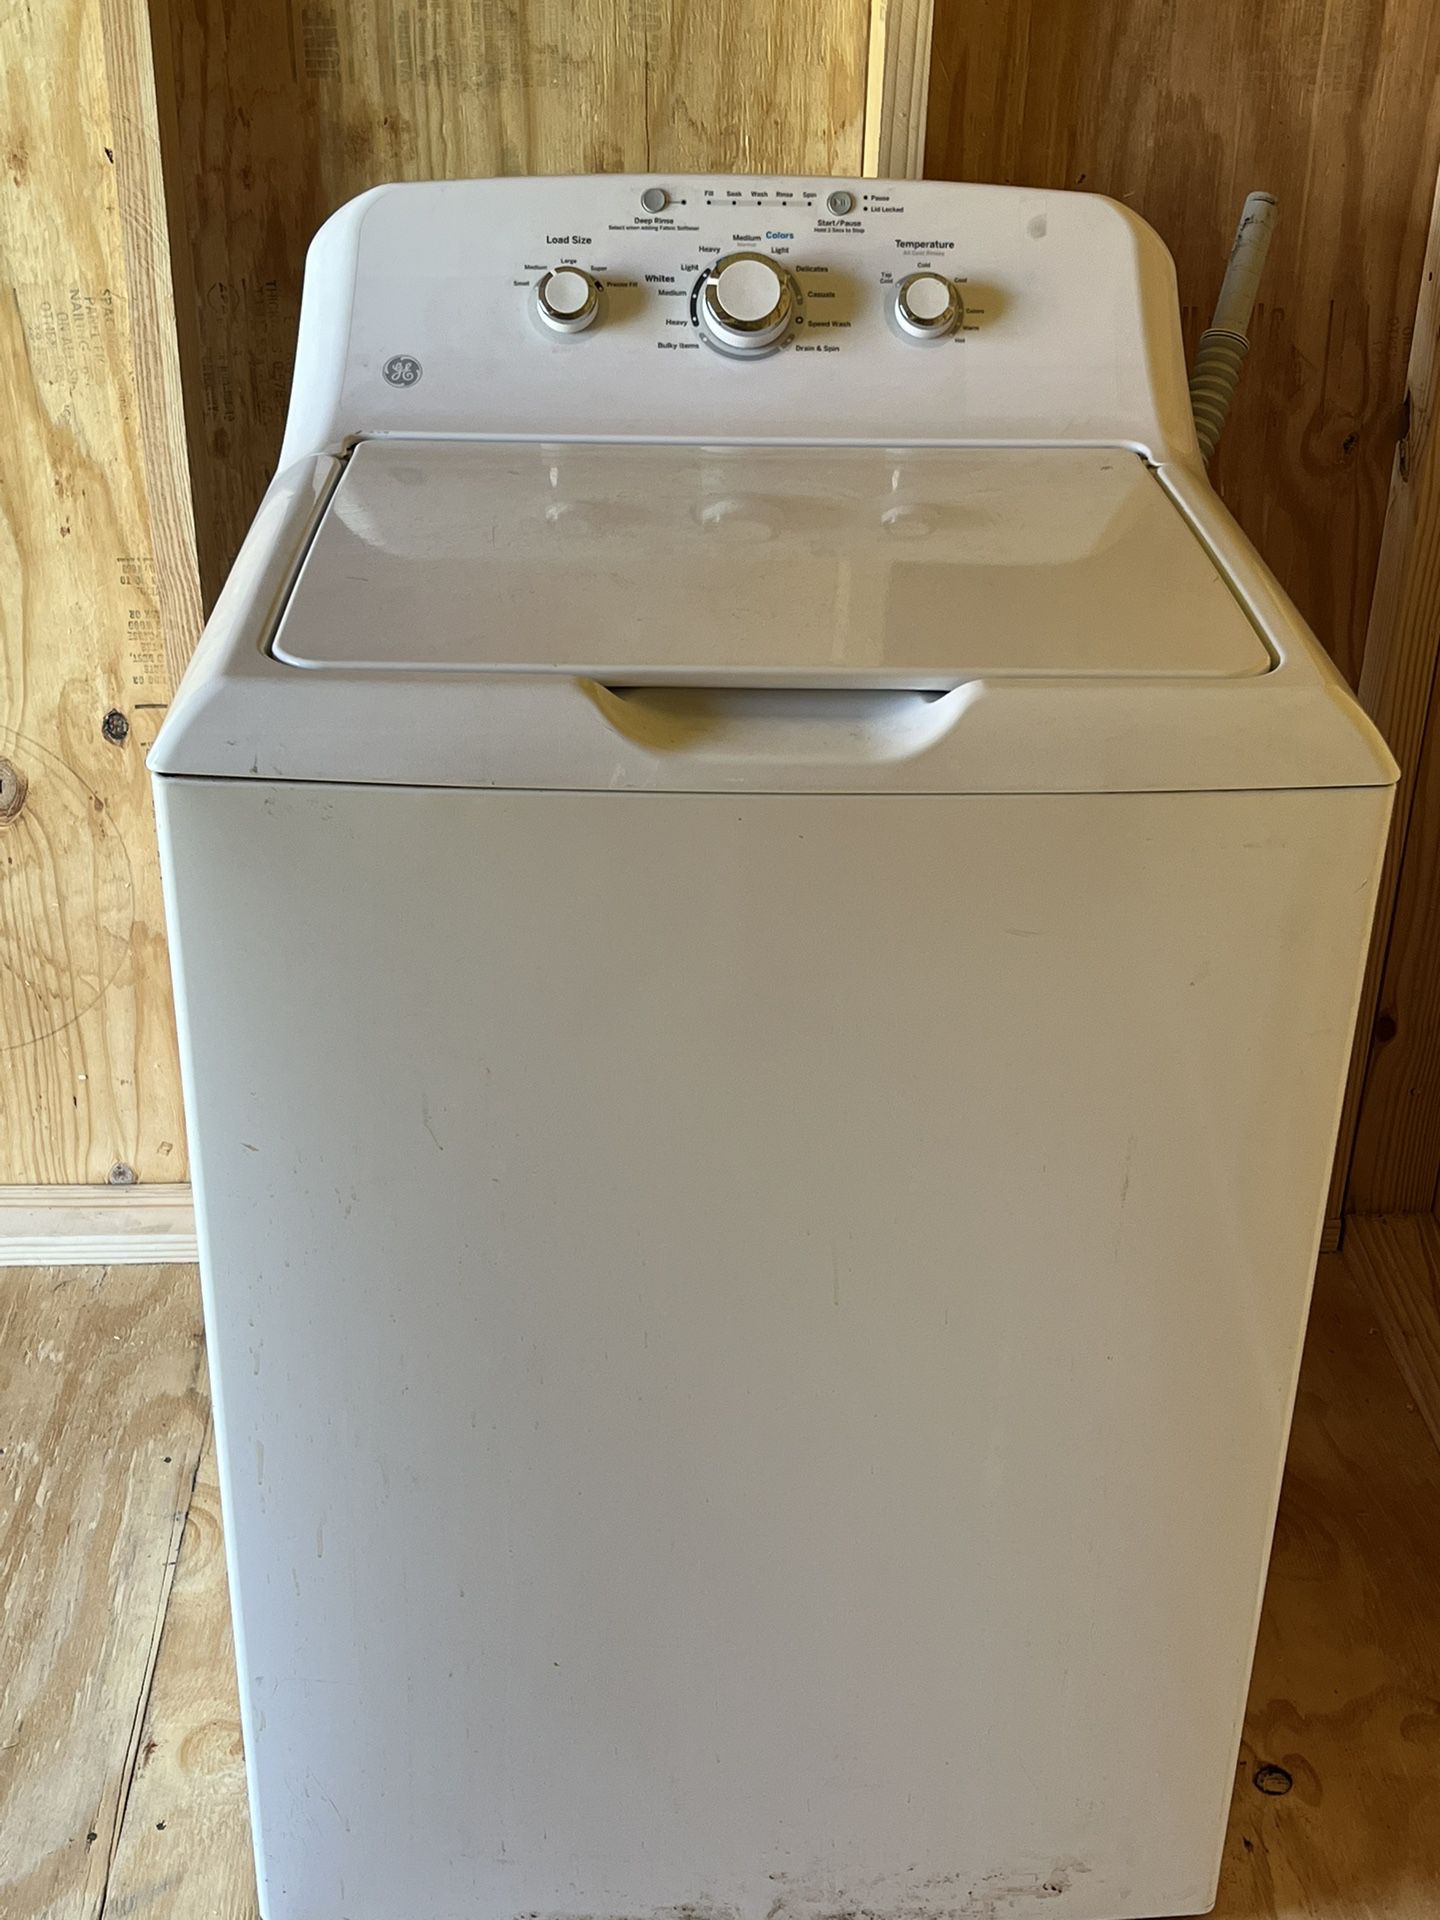 GE Washing Machine (3.8 cu. ft.)